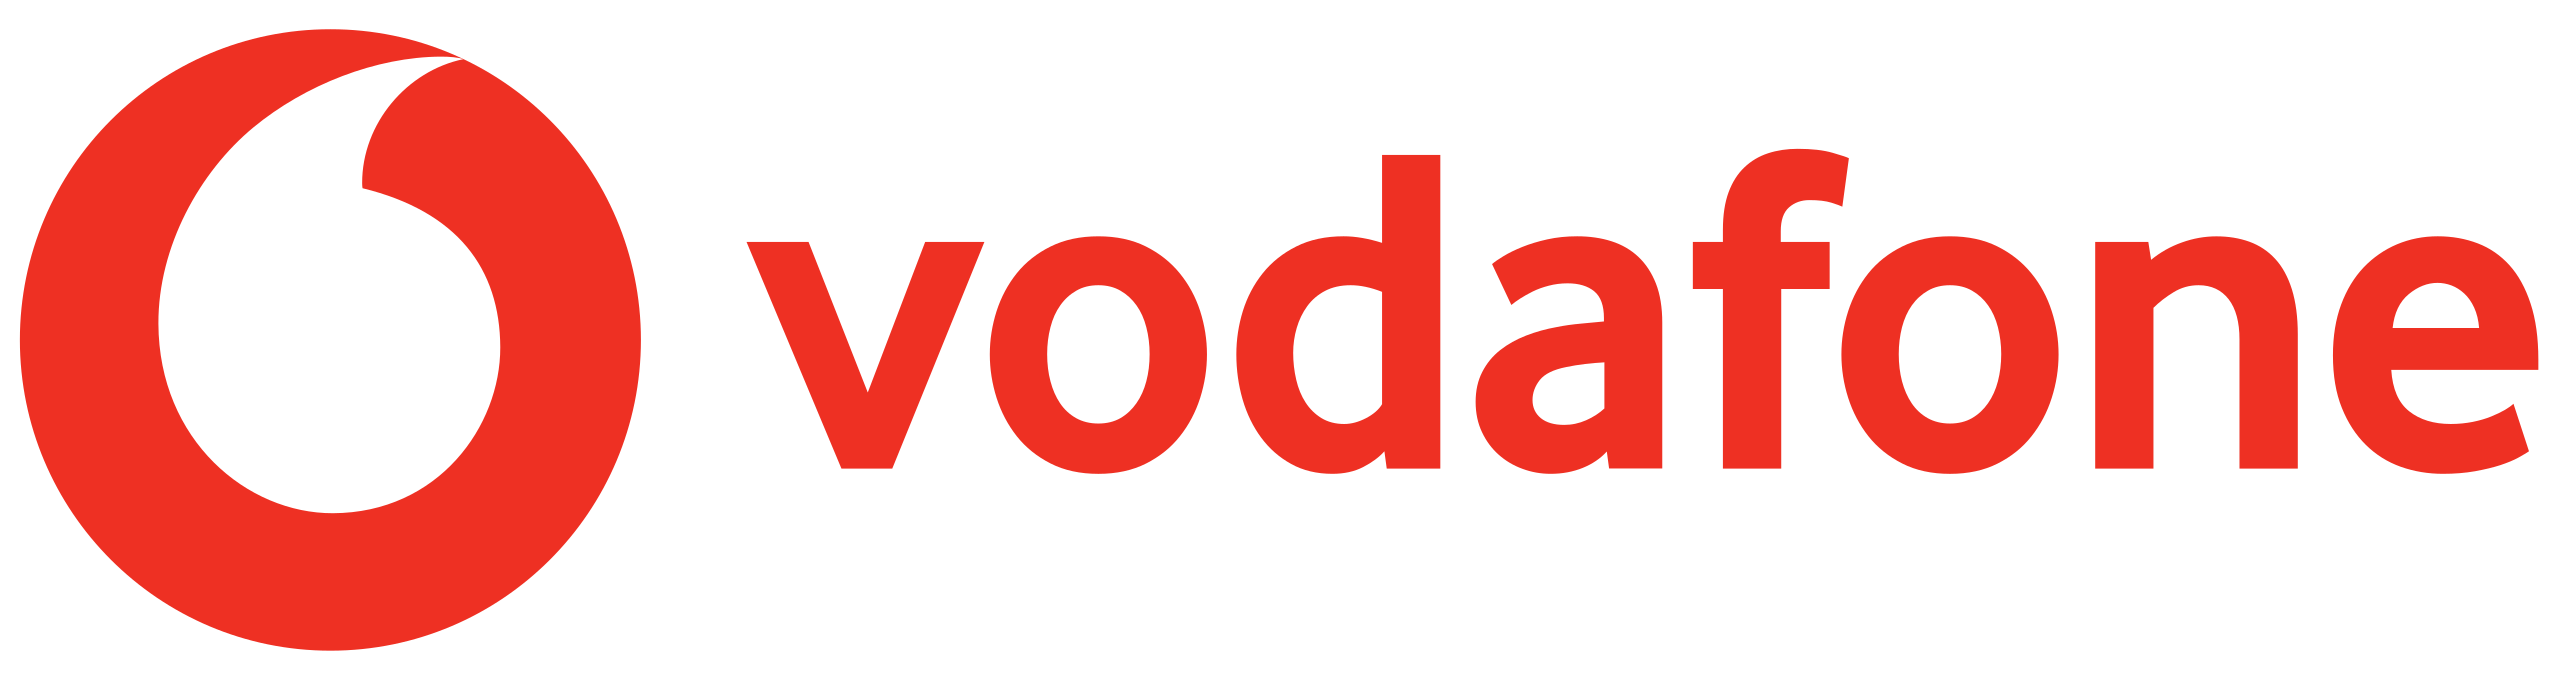 Vodafone_2017_logo.svg